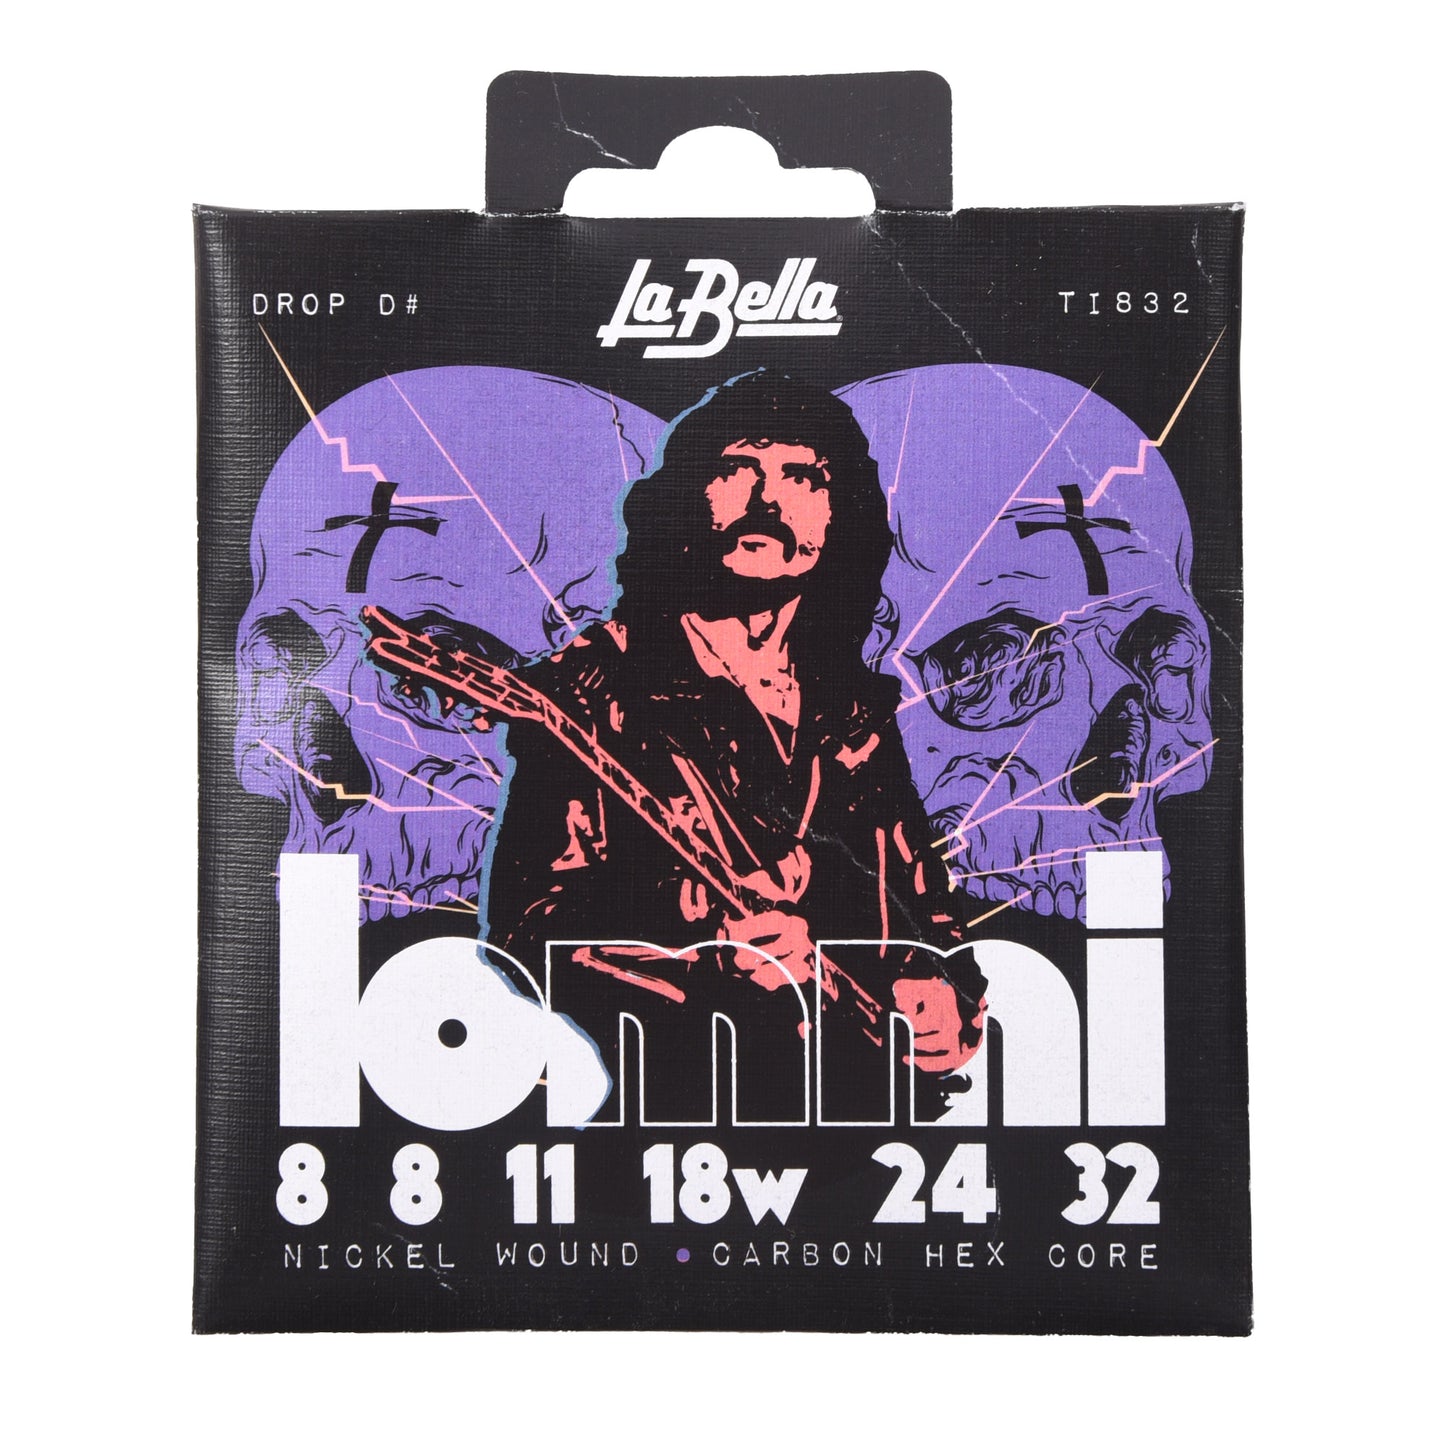 La Bella TI832 Tony Iommi Signature Electric Guitar Strings 8-32